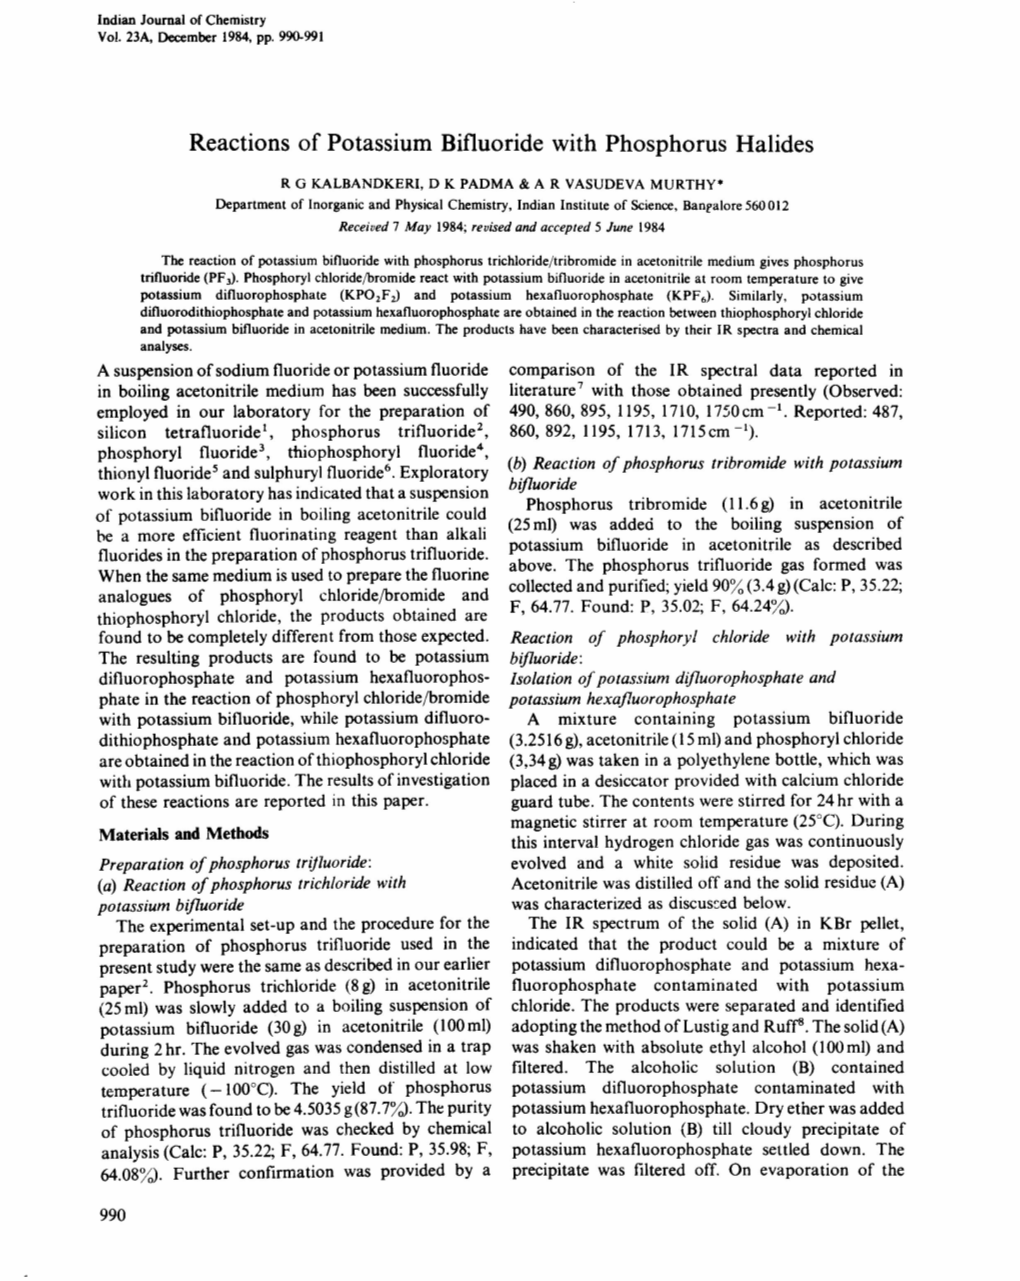 Reactions of Potassium Bifluoride with Phosphorus Halides